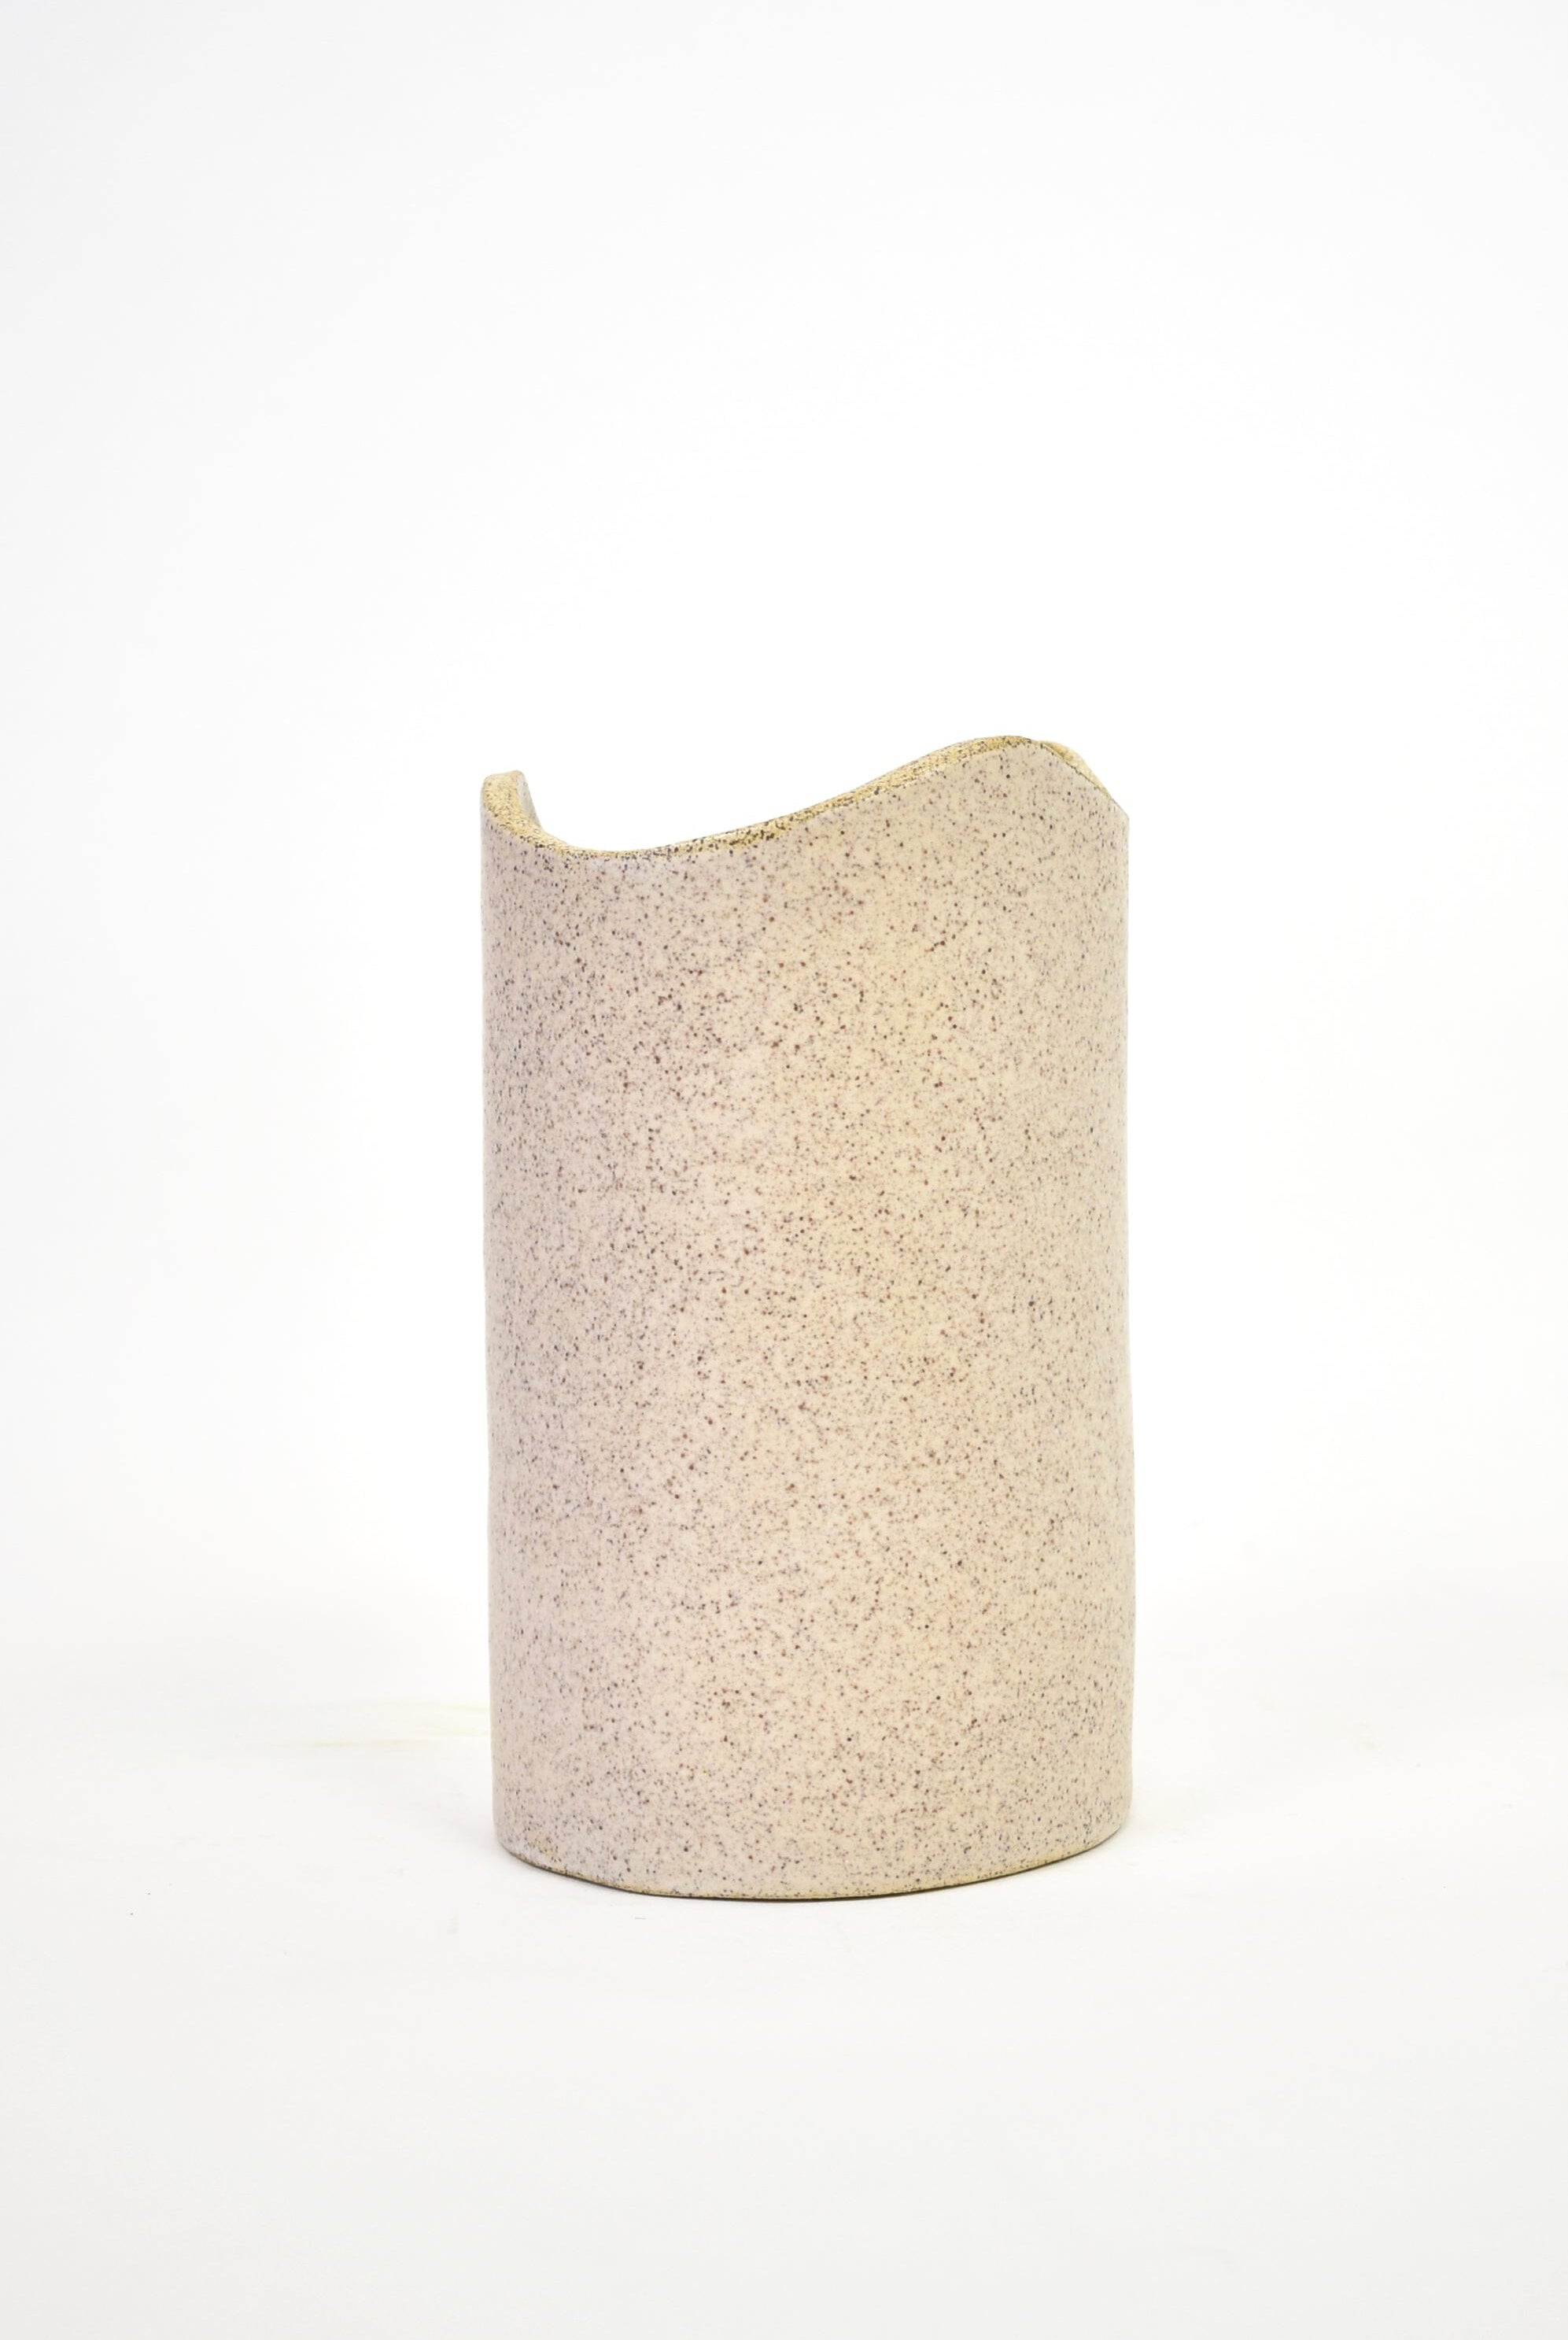 SIN Ceramics | Swell Utensil Holder In Speckled White - SHOP YUCCA Ceramic SIN CERAMICS - YUCCA 